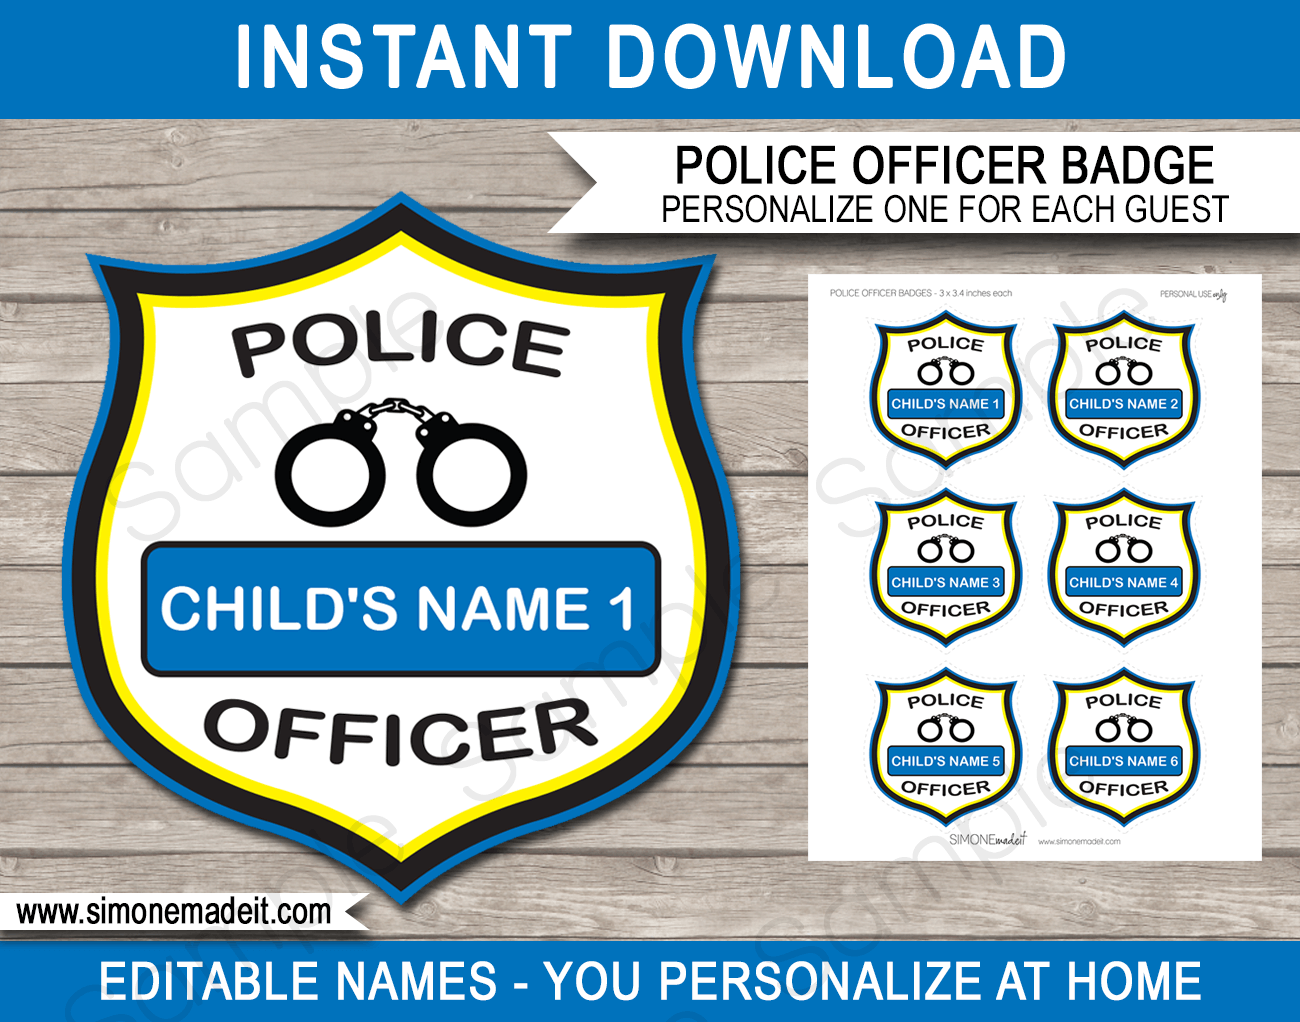 Police Officer Badges | Police Birthday Party | Editable & Printable DIY Template | via SIMONEmadeit.com 